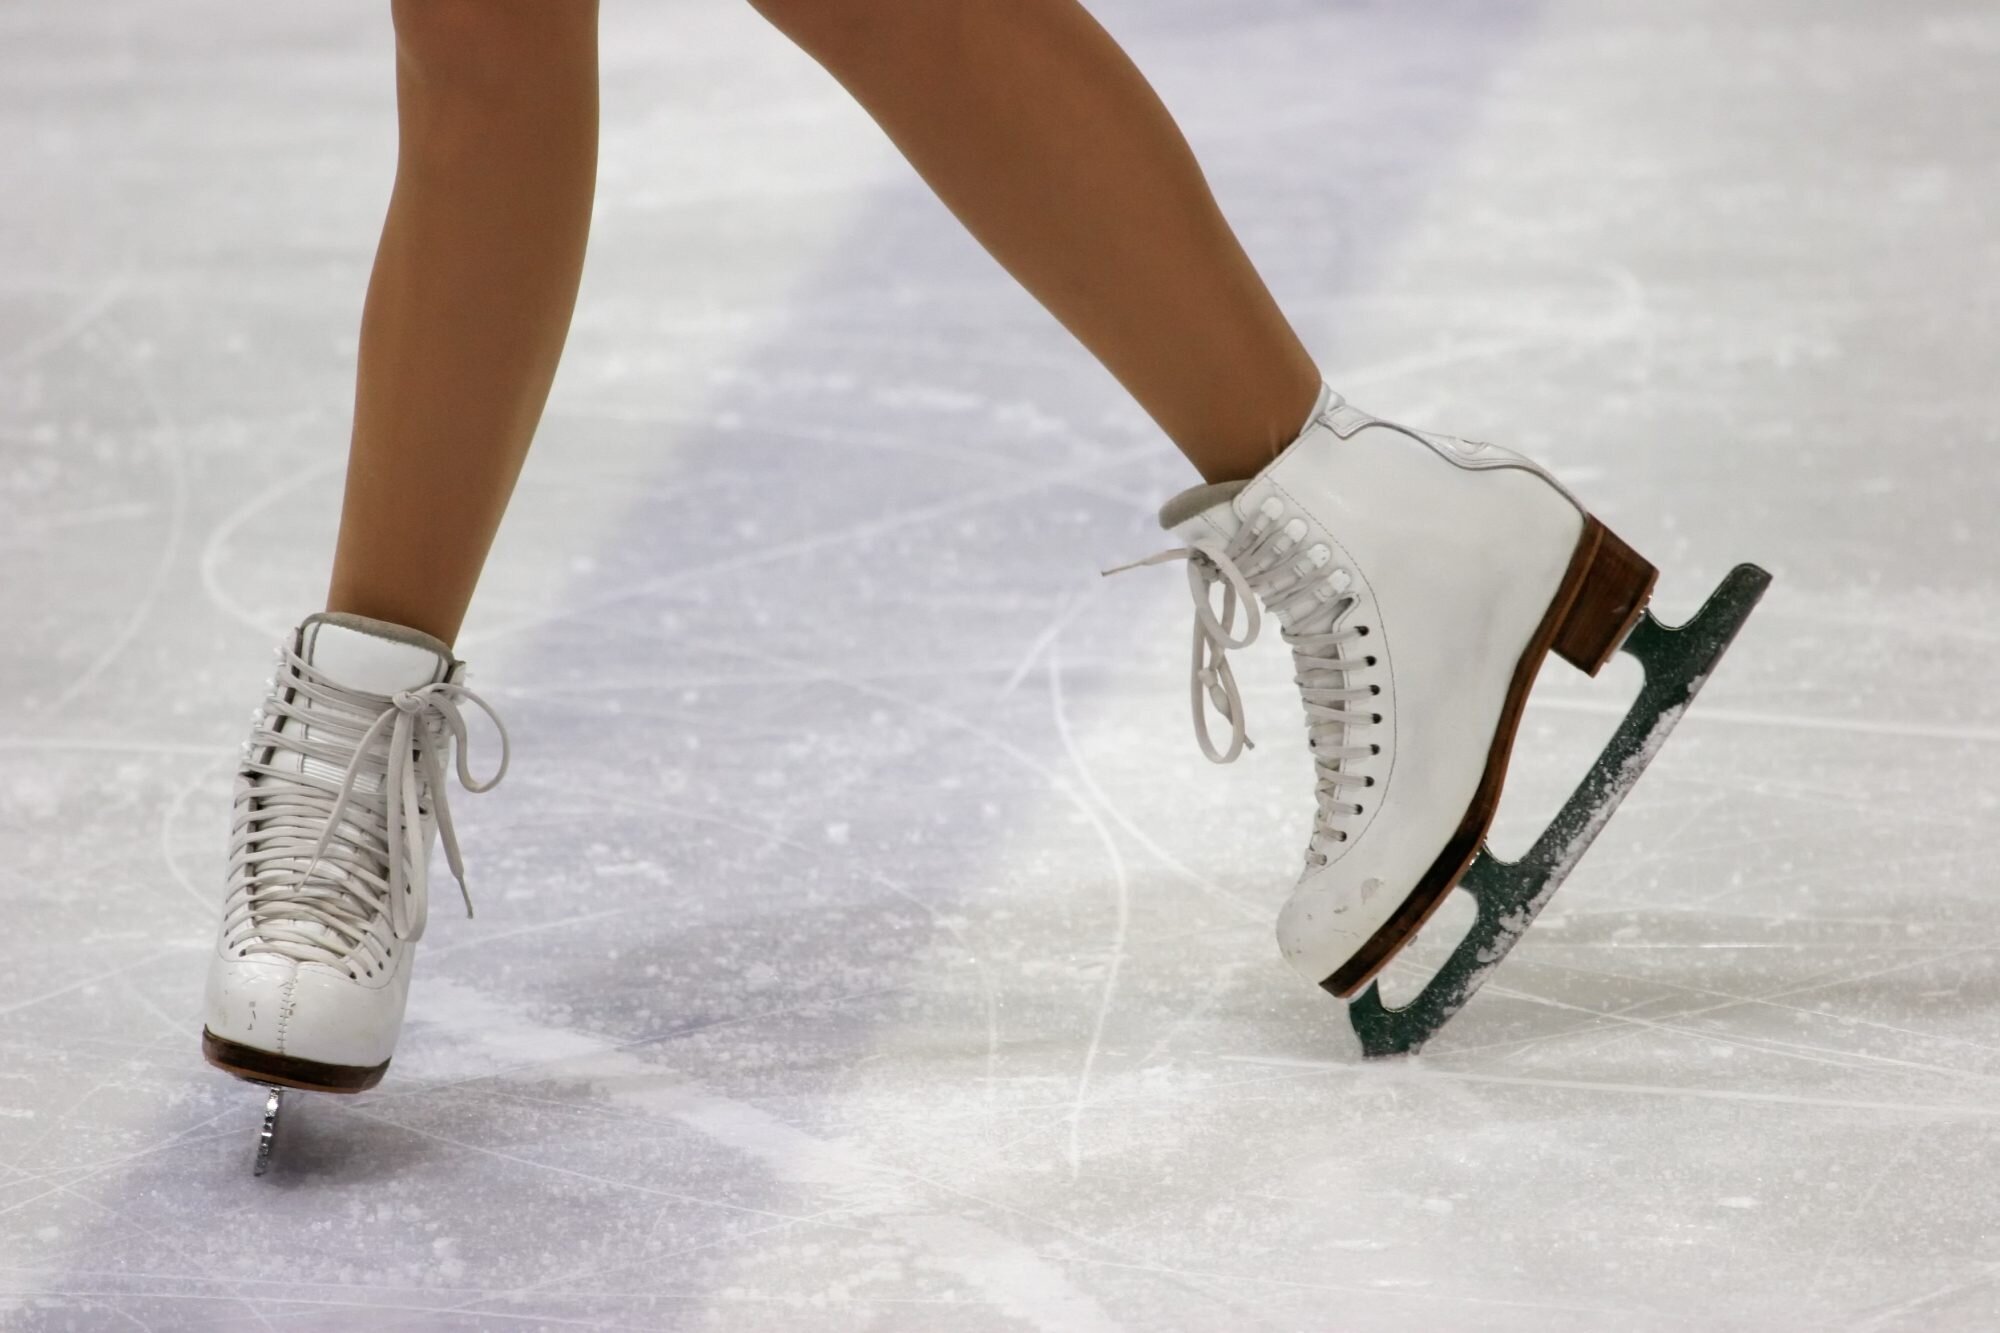 Ice skates 